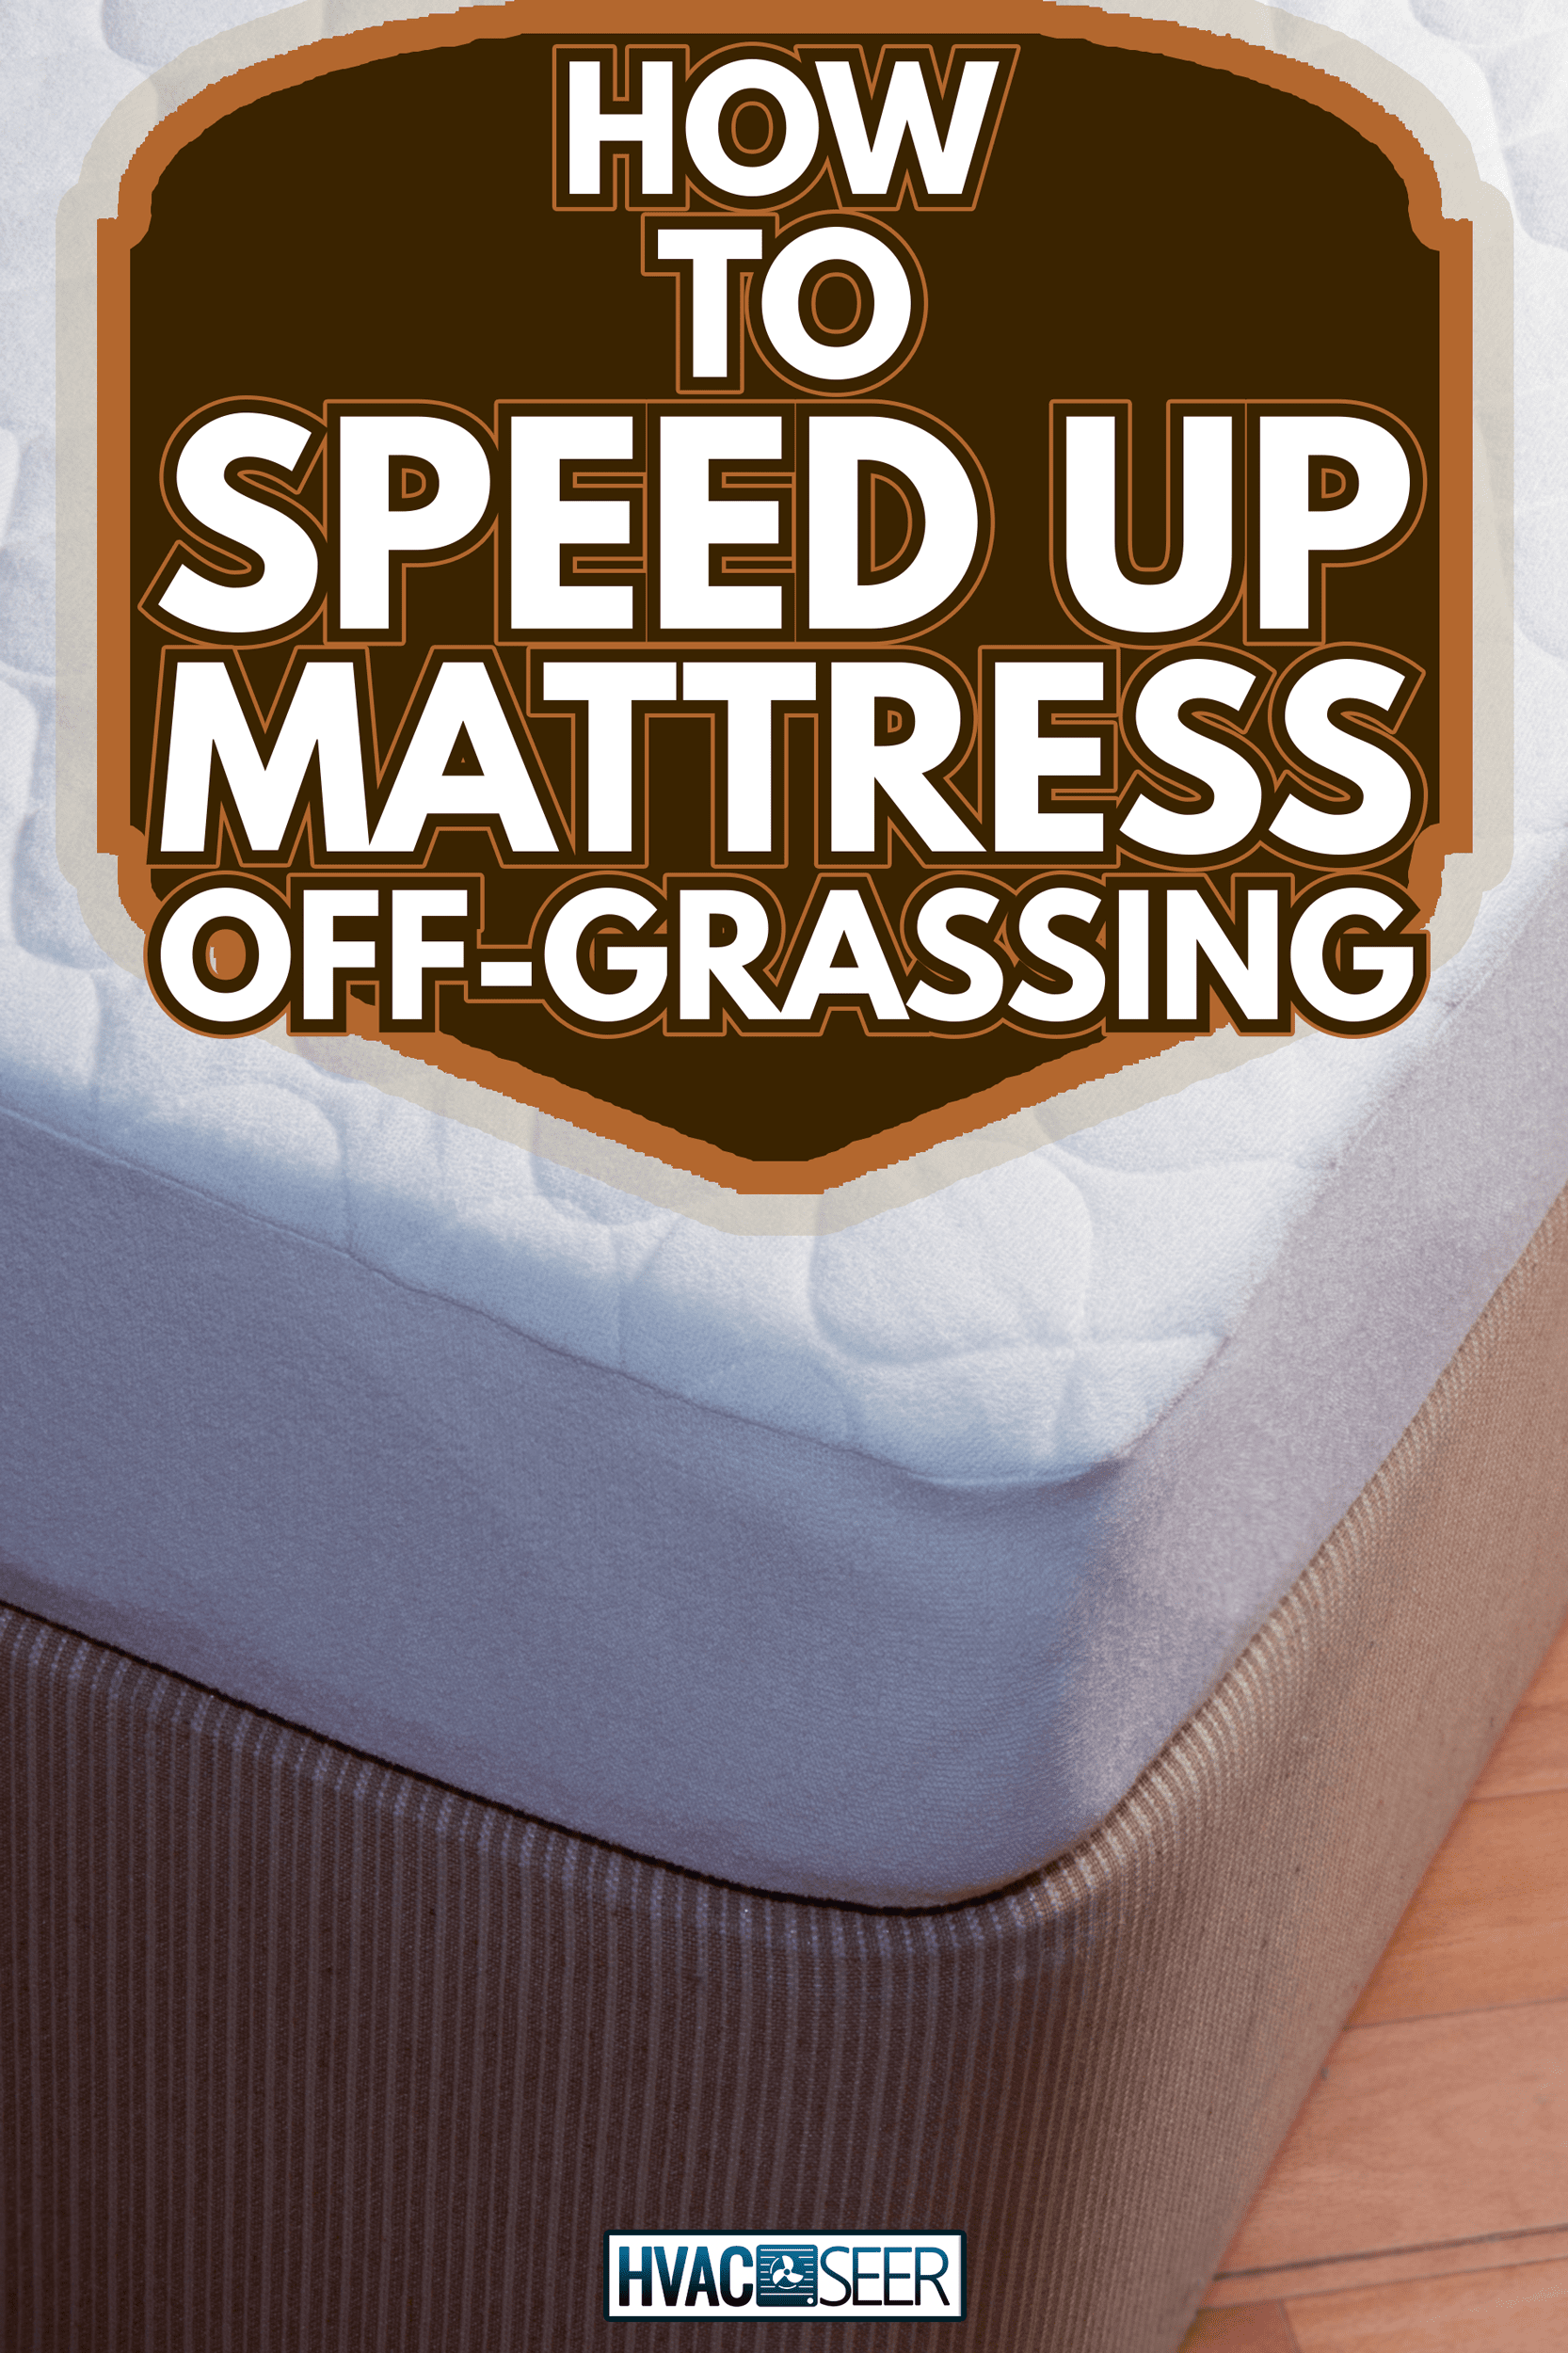 spring mattress - How To Speed Up Mattress Off-Gassing